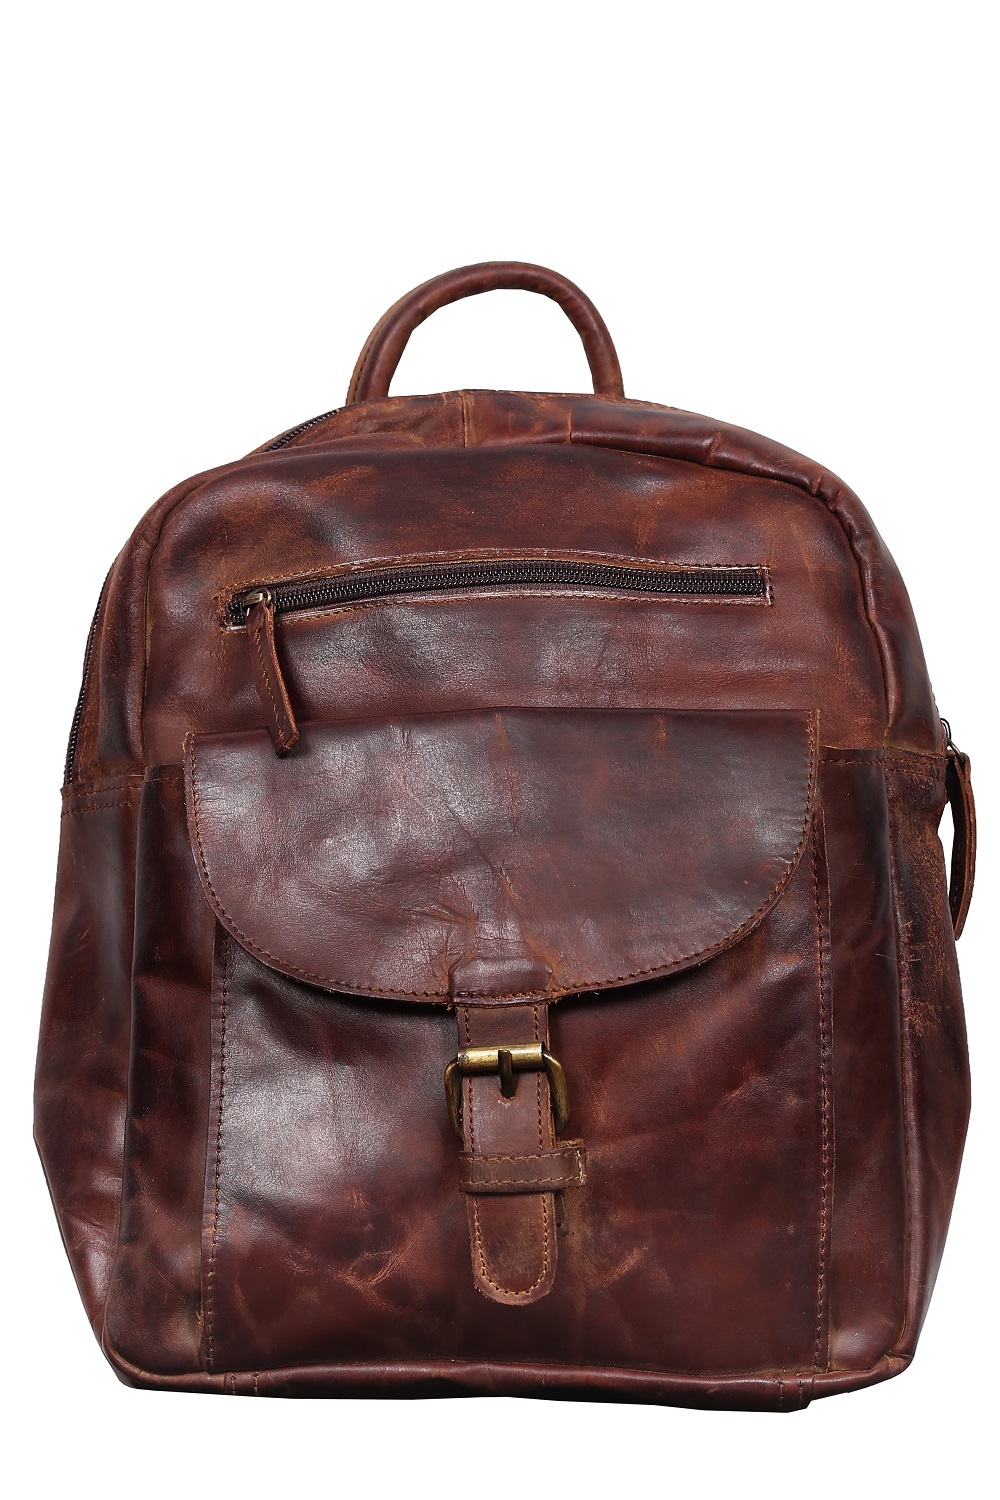 Handmade Leather Backpack, Unisex Travel bag, Front Pockets Carry Handle Bag,